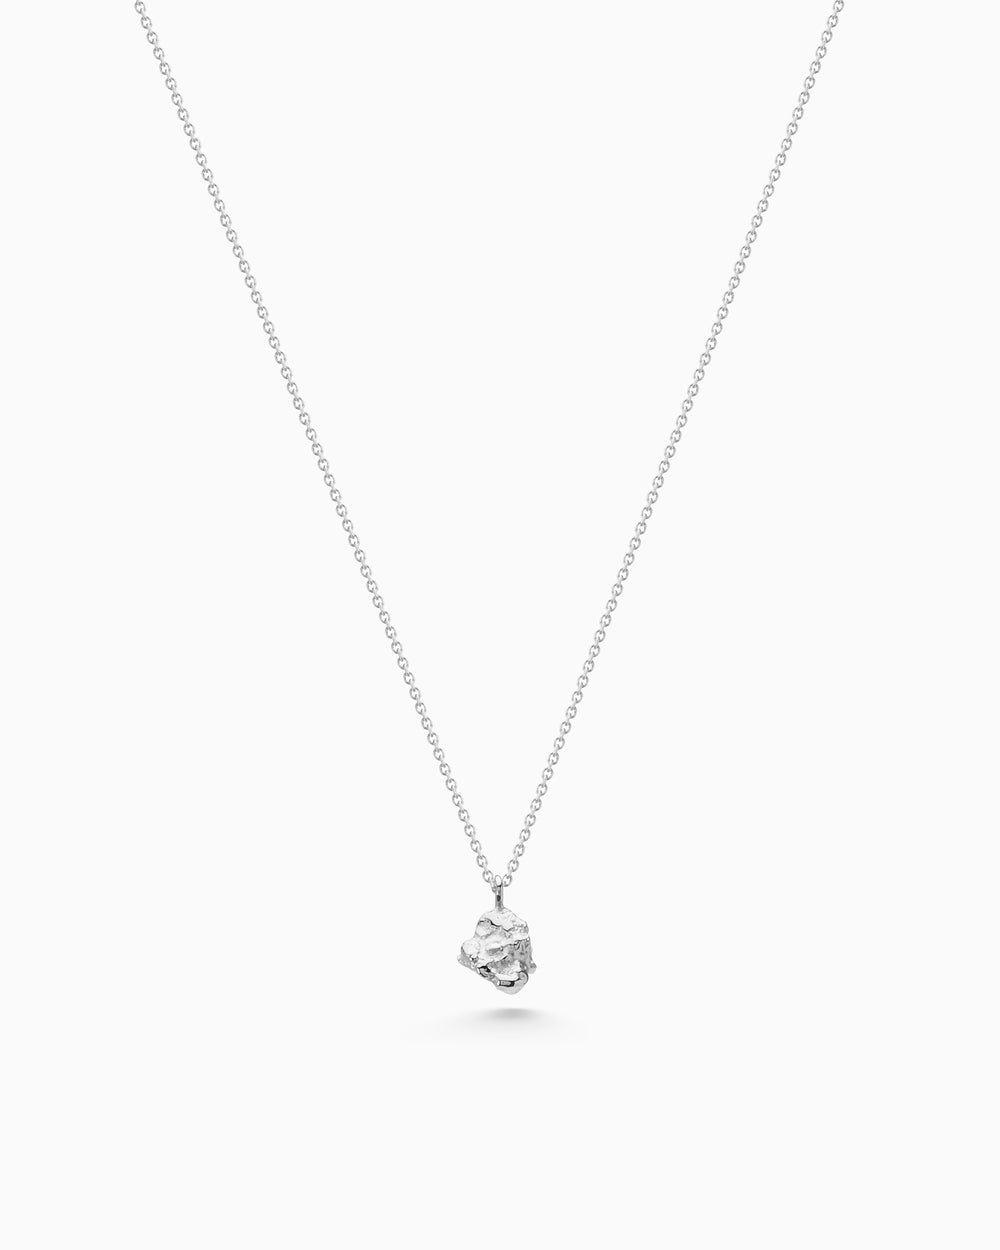 Ingot Necklace | Silver